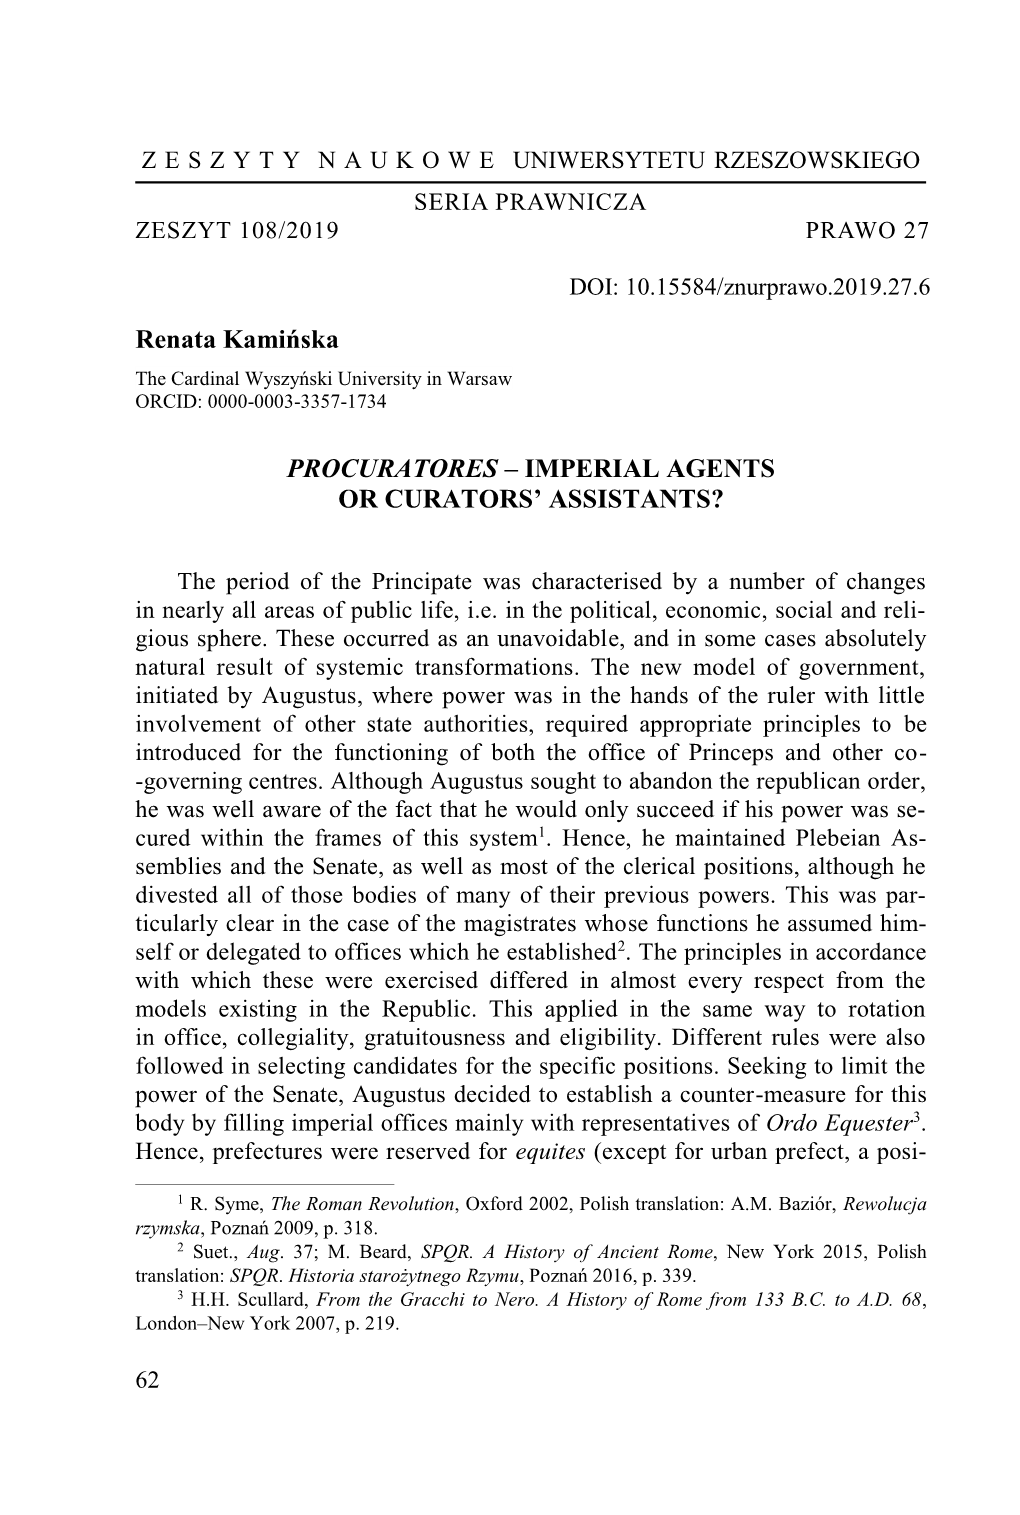 Renata Kamińska PROCURATORES – IMPERIAL AGENTS OR